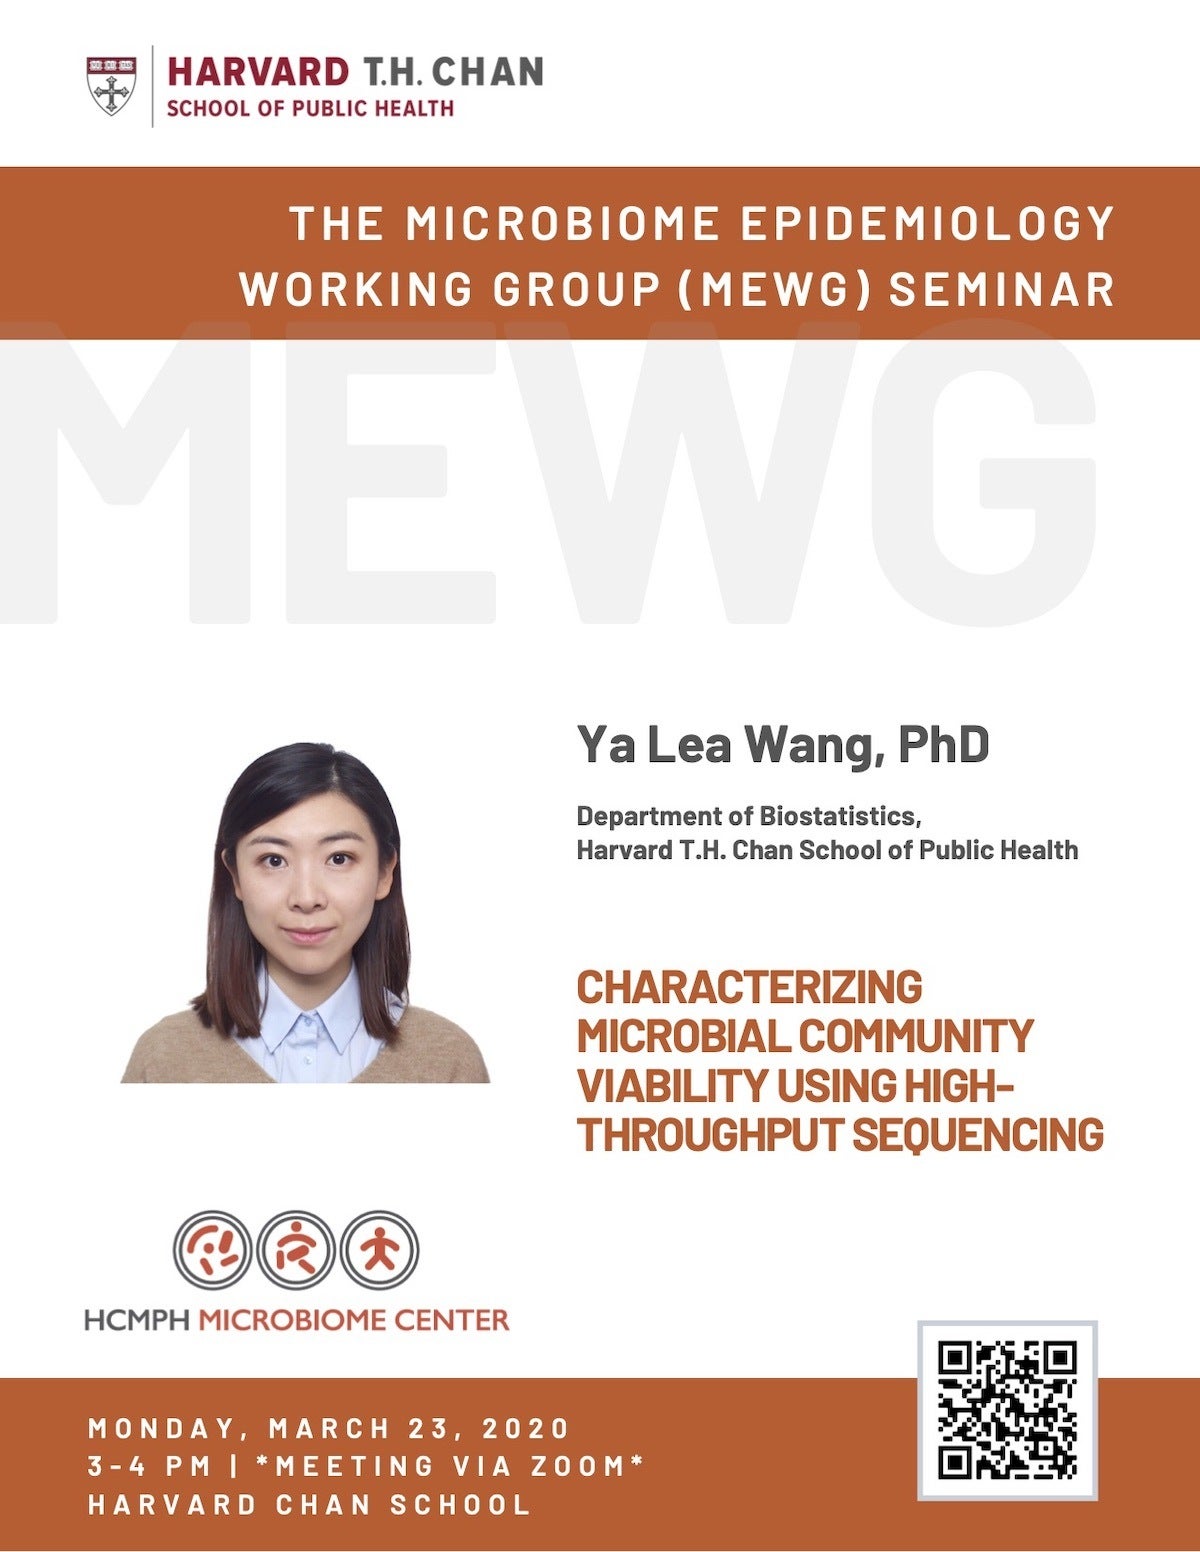 MEWG Seminar with Ya Lea Wang